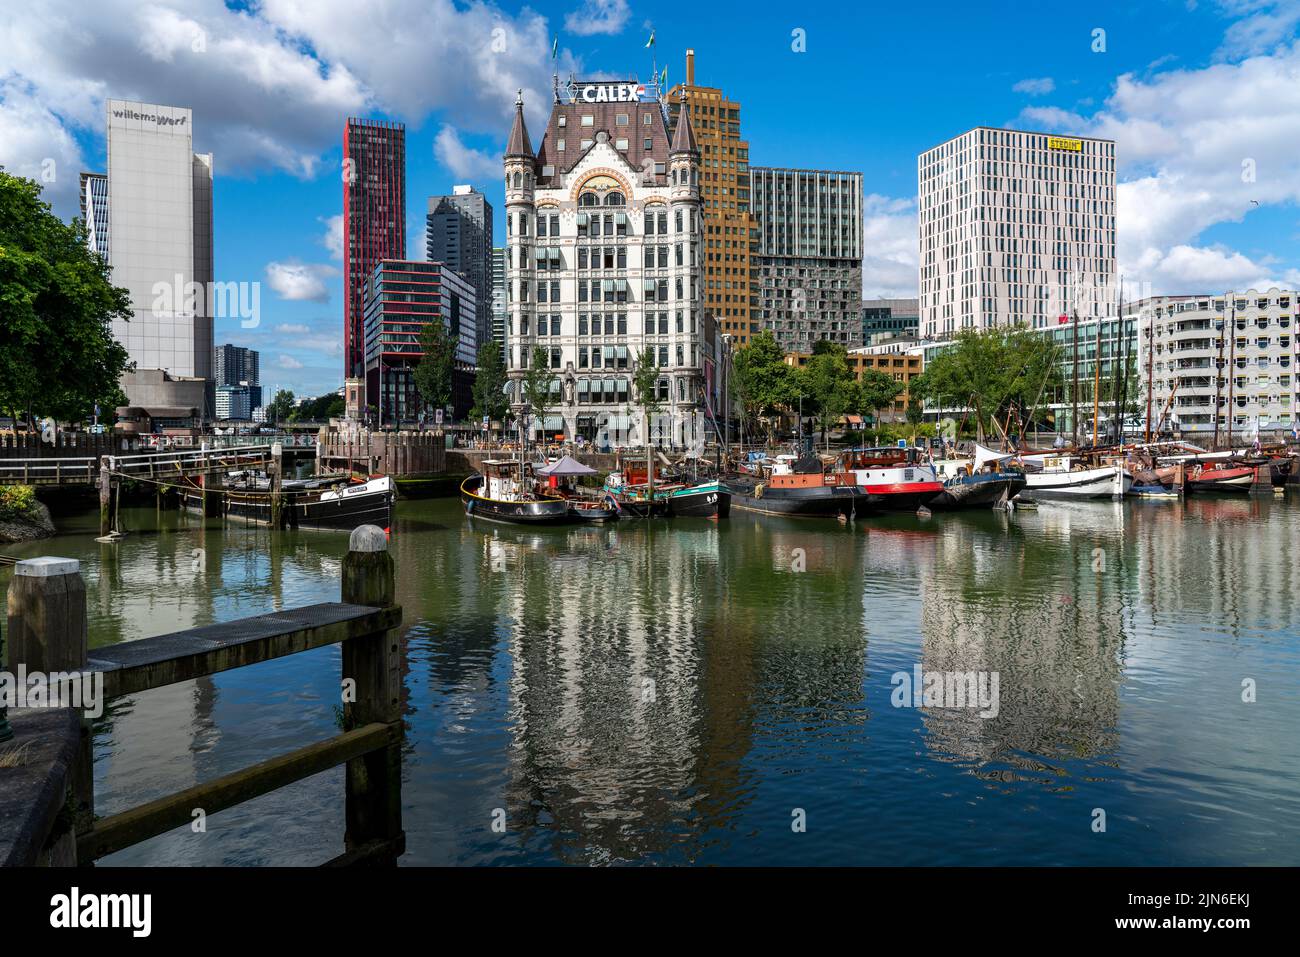 Centro de Rotterdam, Oudehaven, puerto histórico, barcos históricos, ciudad moderna telón de fondo, Países Bajos, Foto de stock